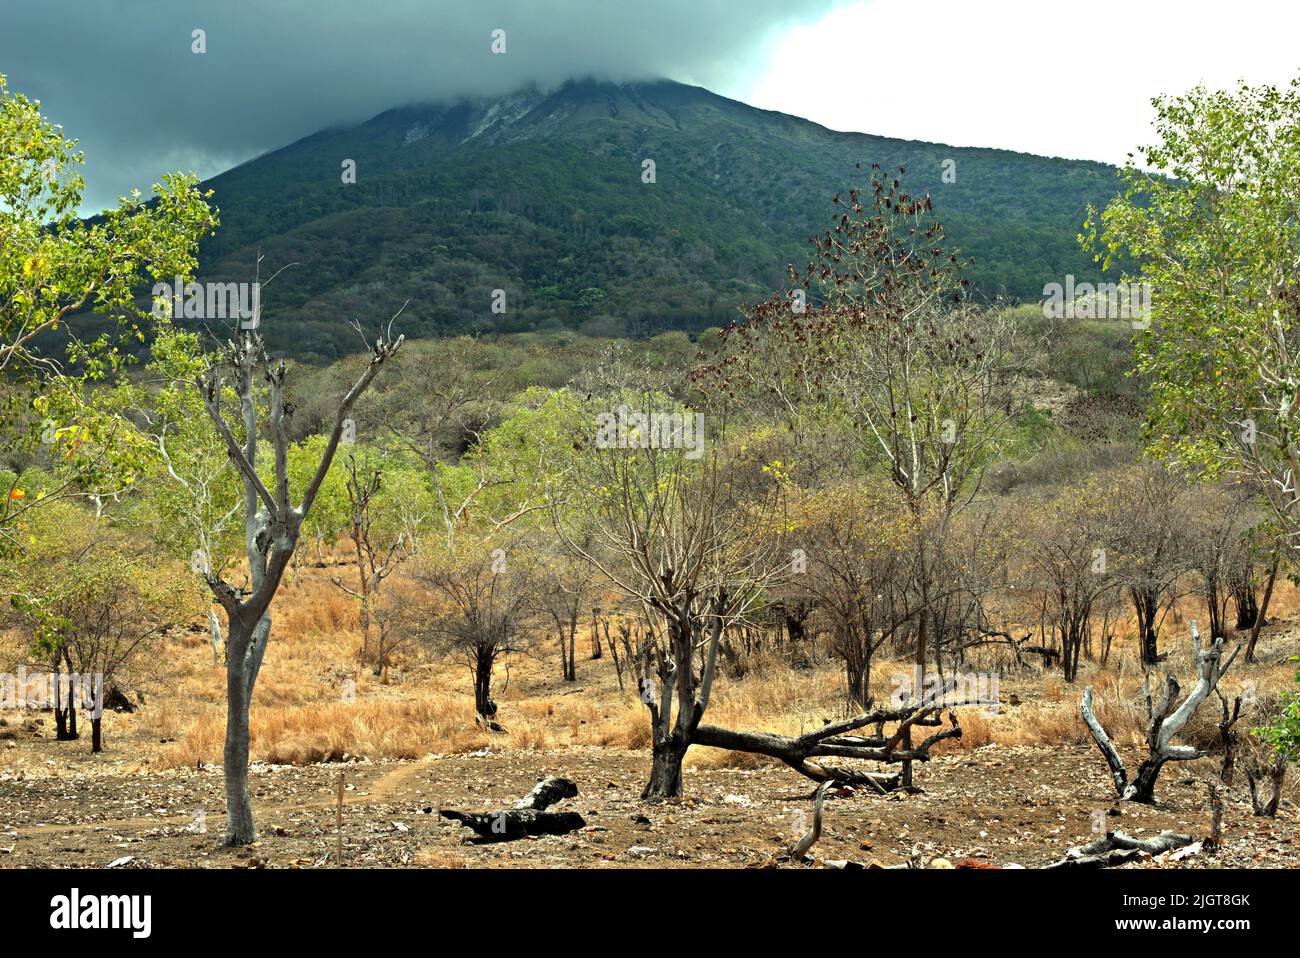 Tote Bäume auf trockener Landschaft am Fuße des Mount Lewotolok in Lembata, East Nusa Tenggara, Indonesien. Stockfoto